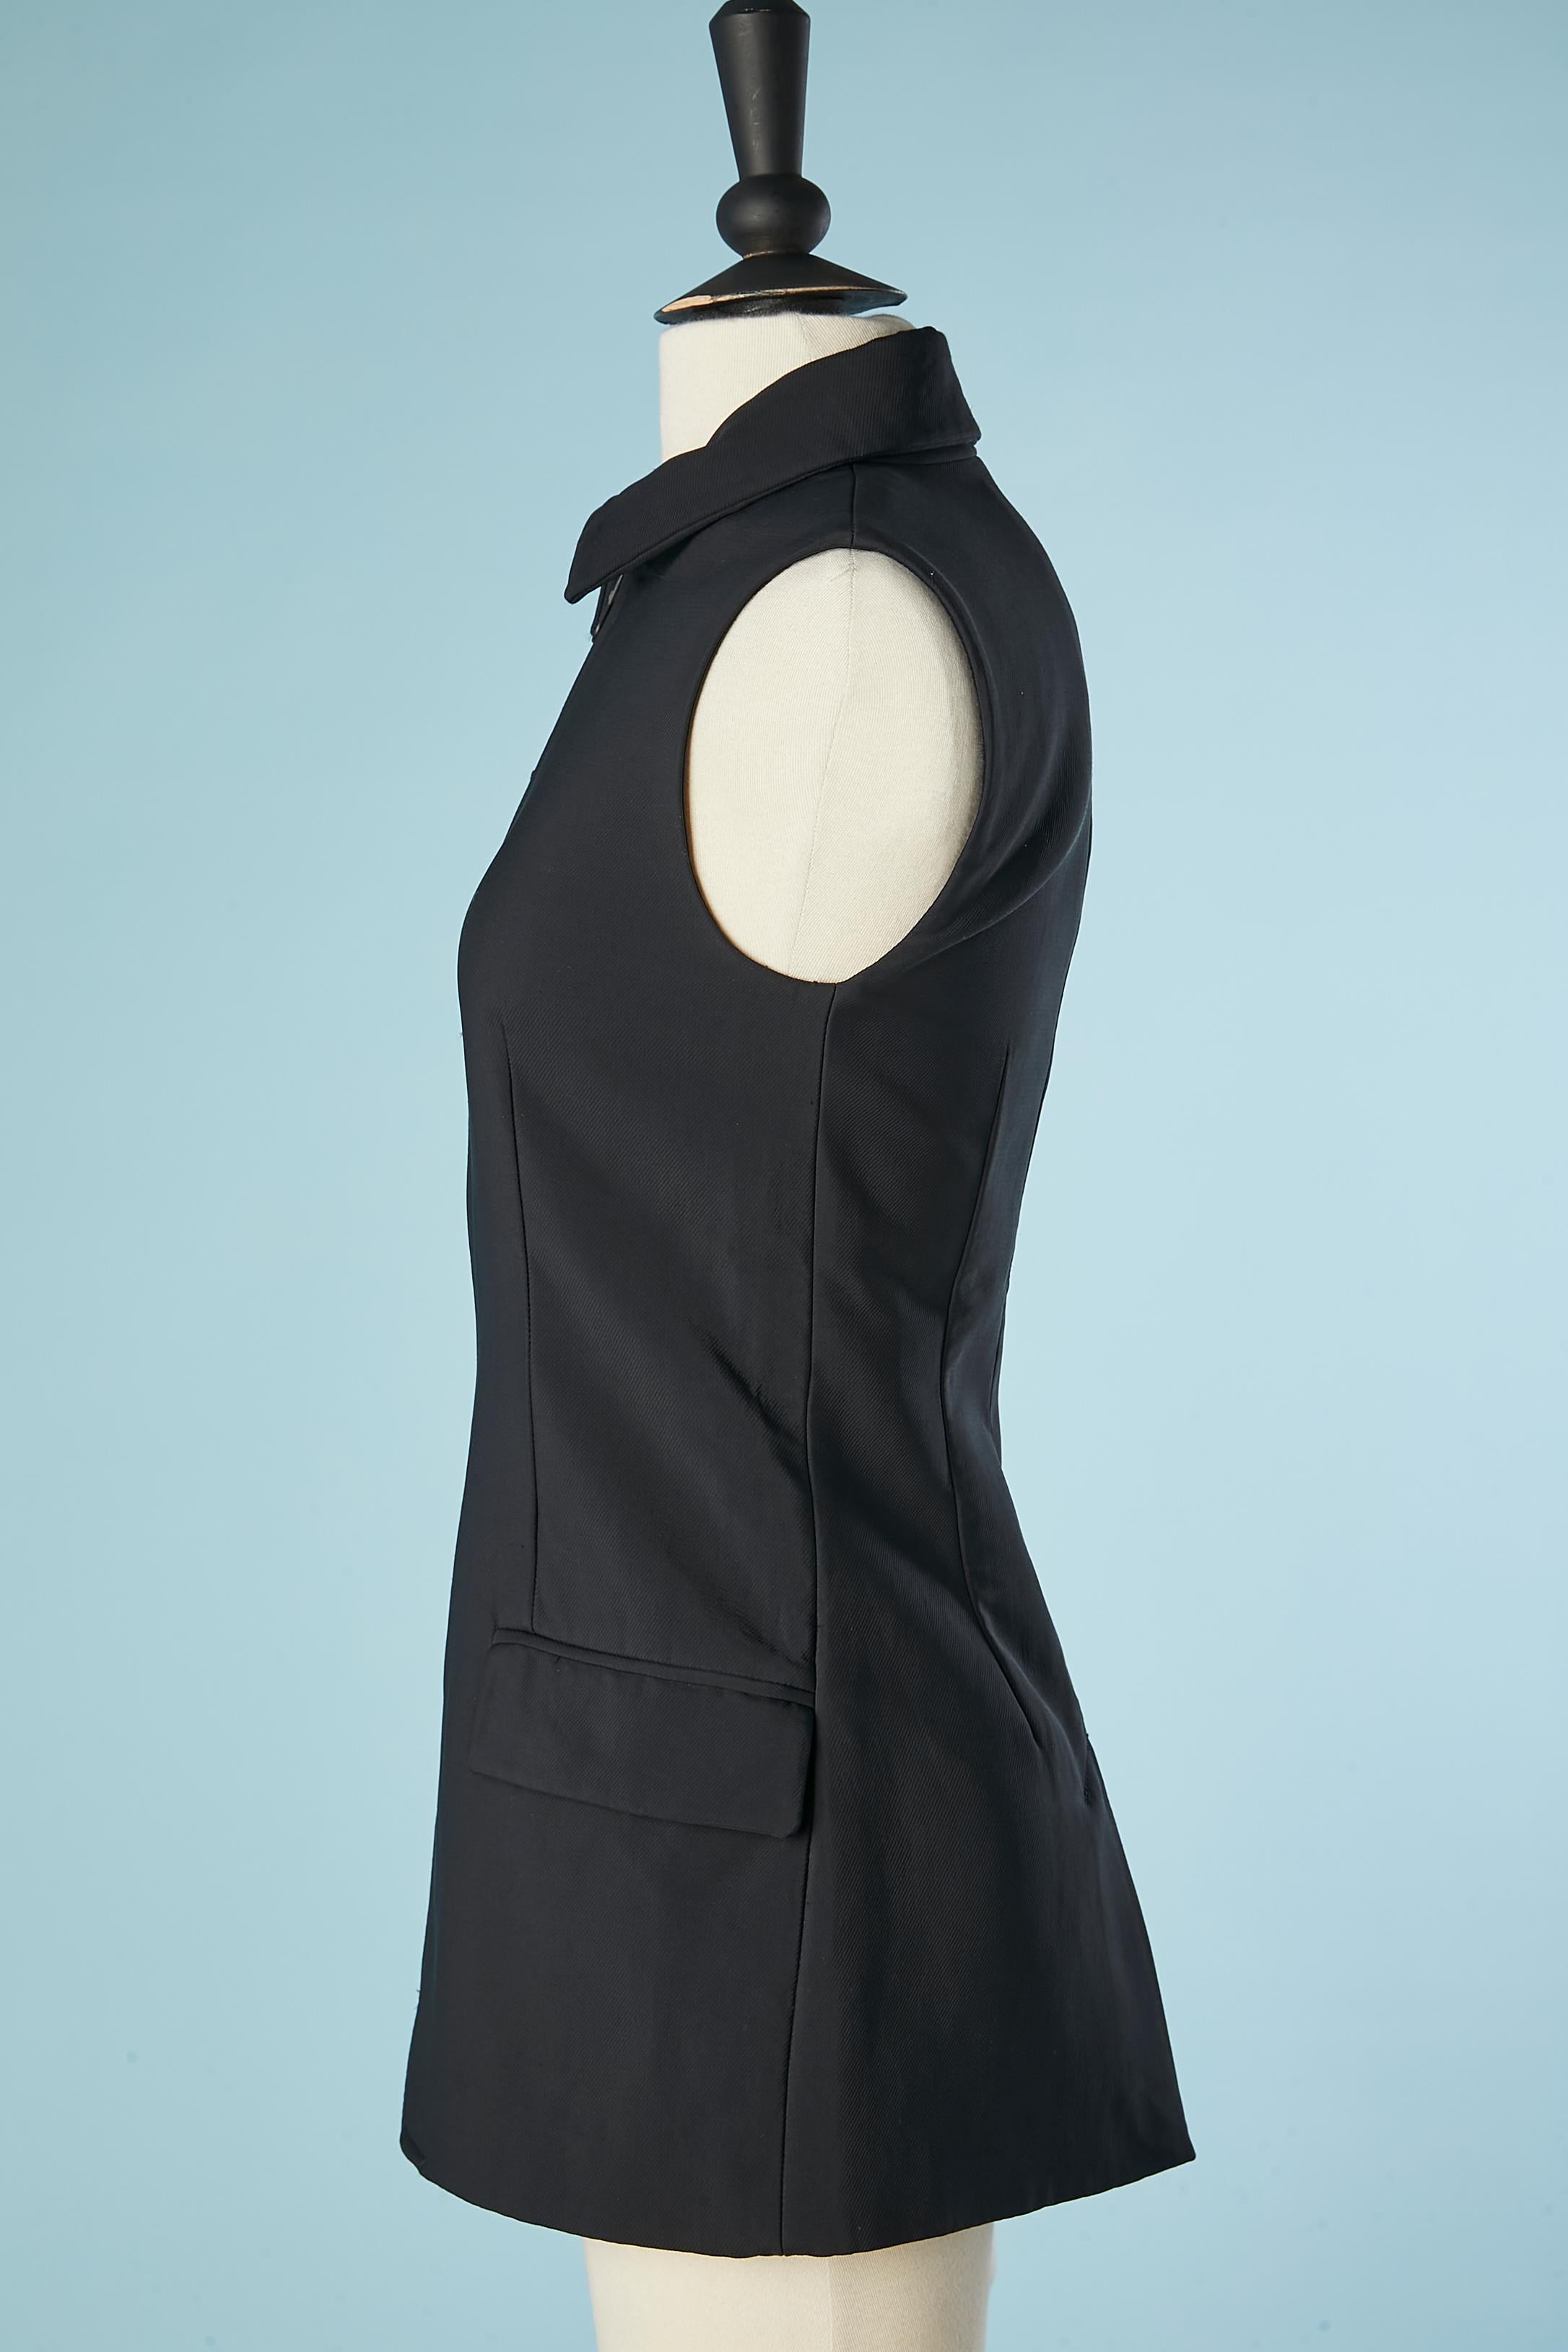 Women's or Men's Black technical tailored sleeveless jacket Kenzo Paris SS 2018 For Sale